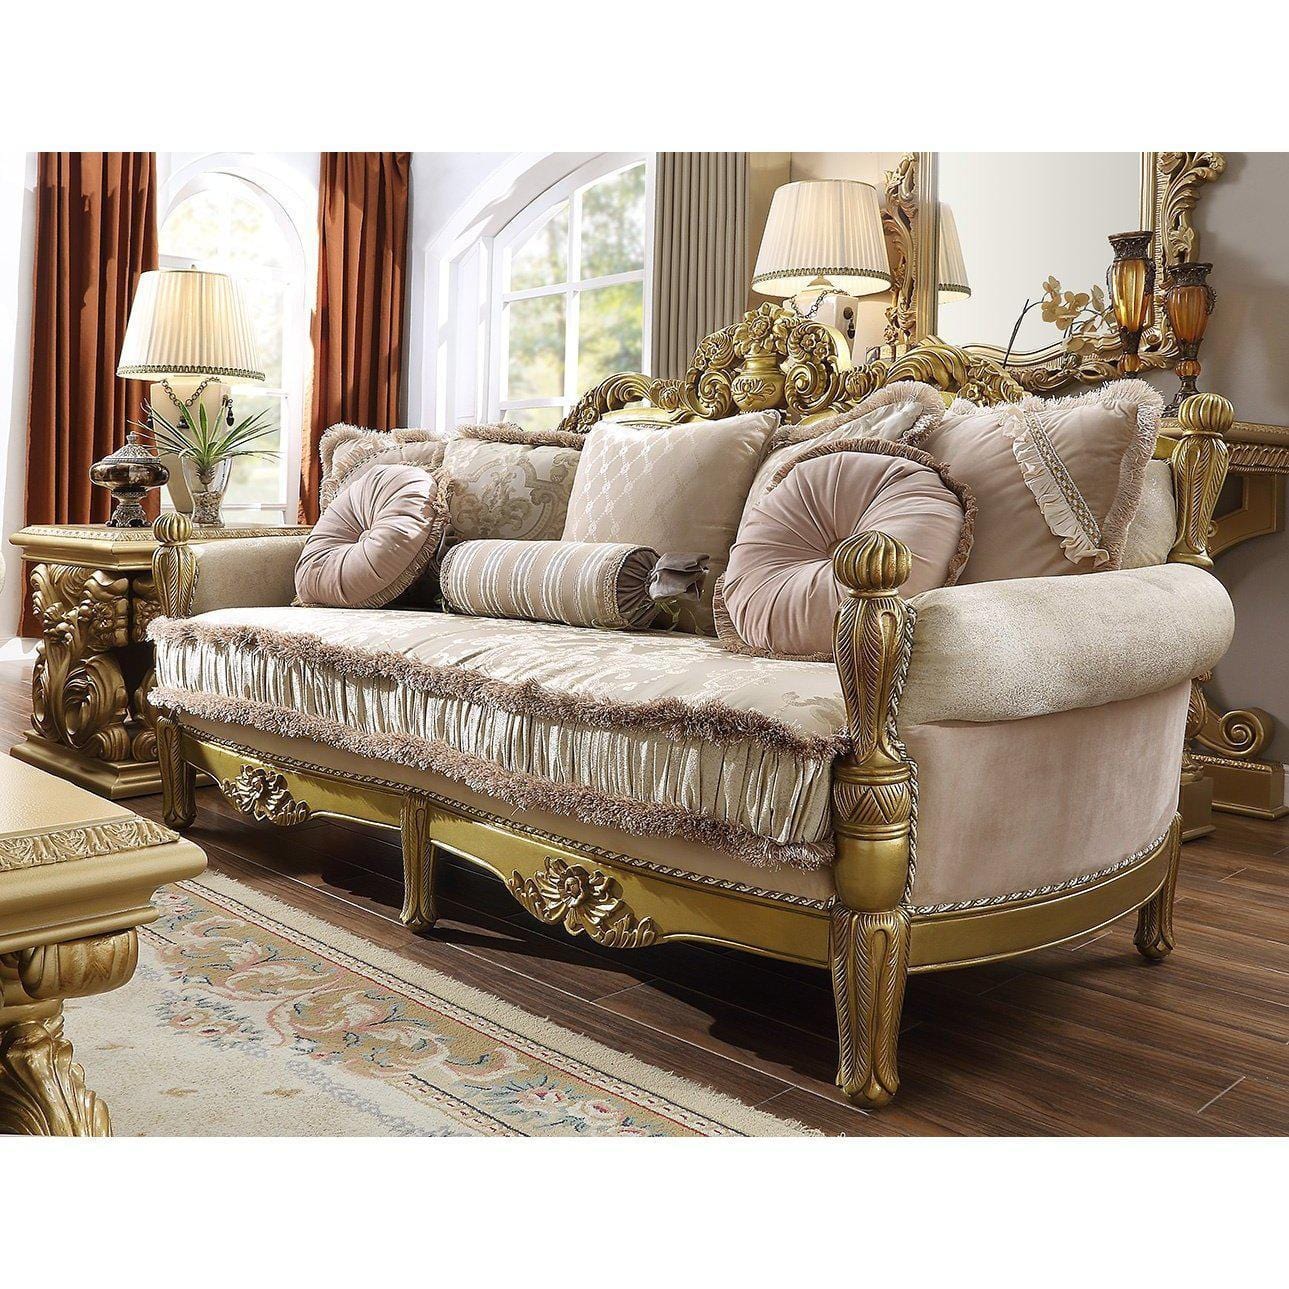 Homey Design Luxury Hd-105 Sofa